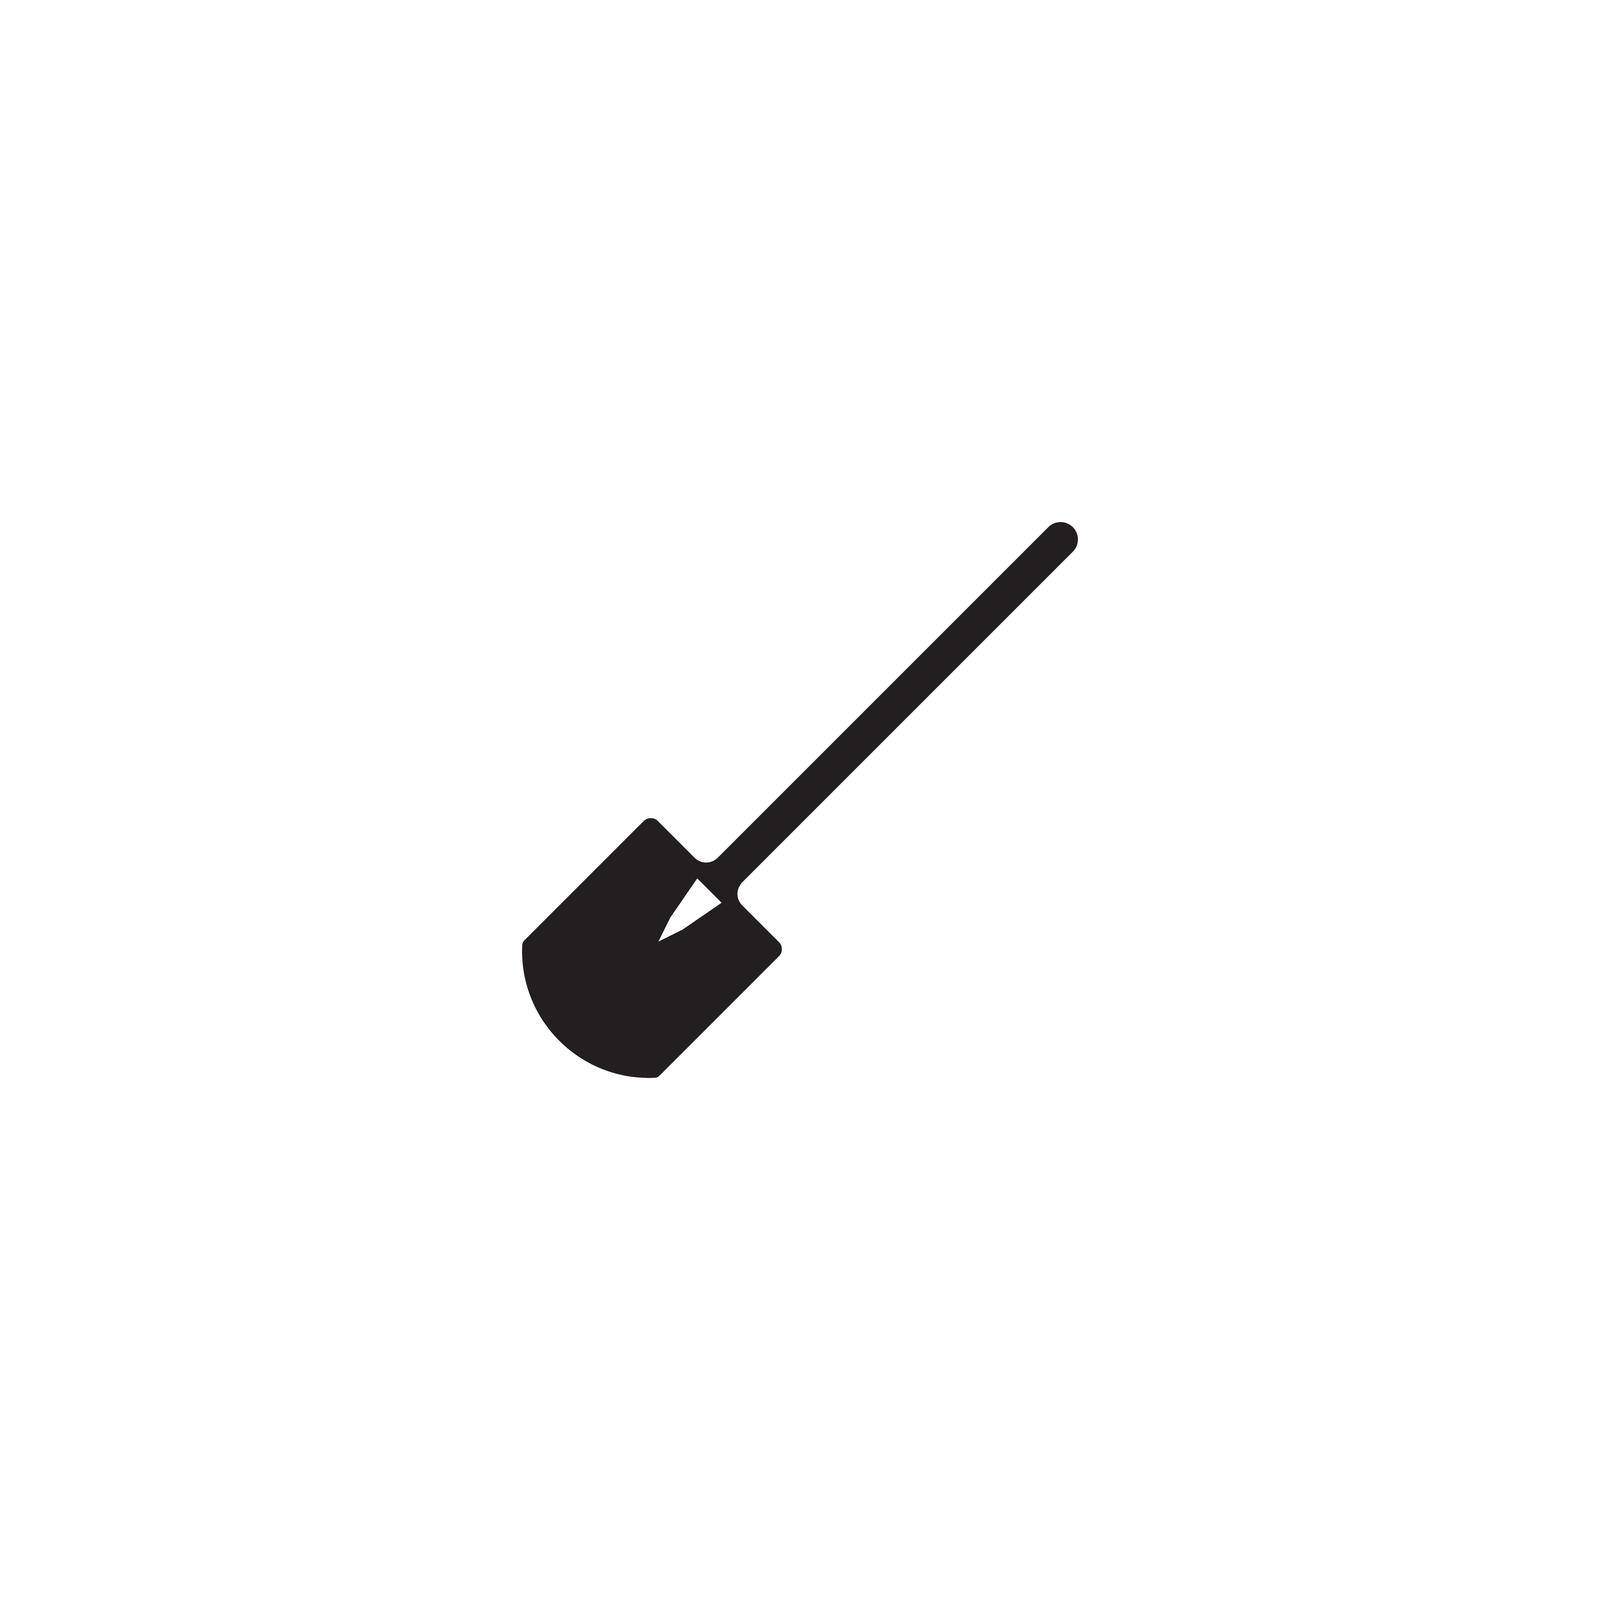 Shovel icon by rnking